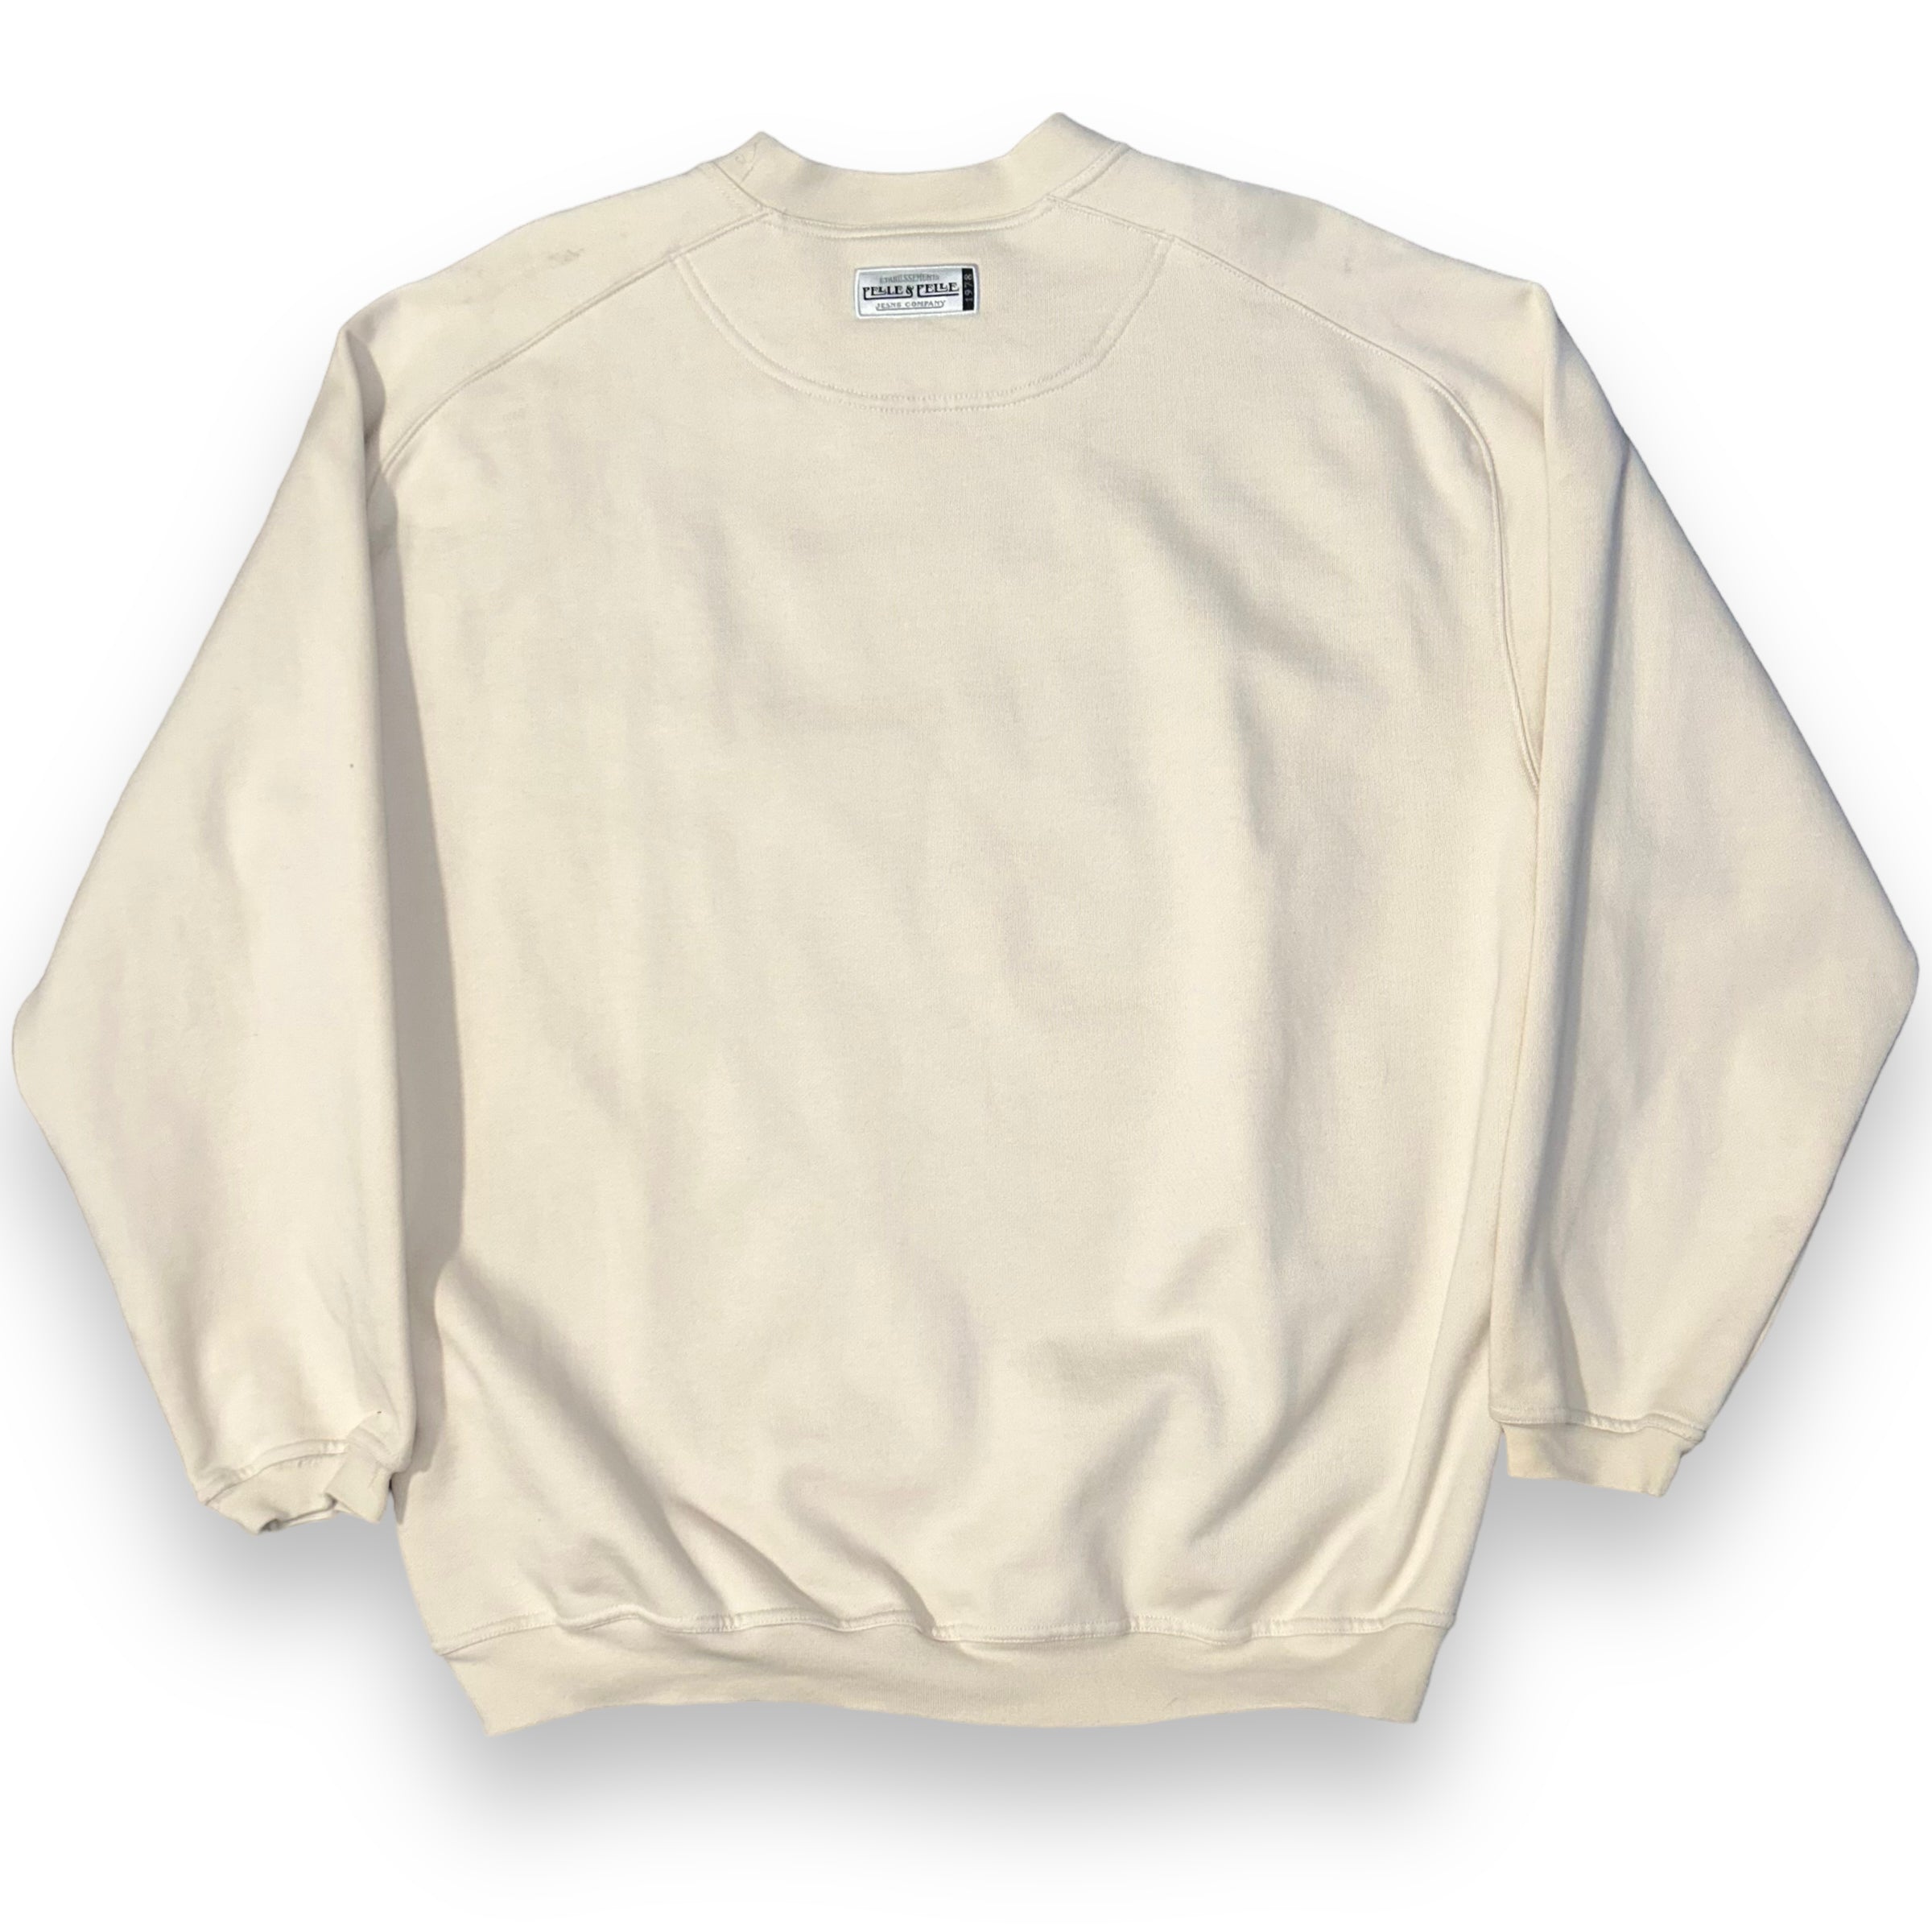 Marc Buchanan Vintage Leather Sweatshirt (XL)